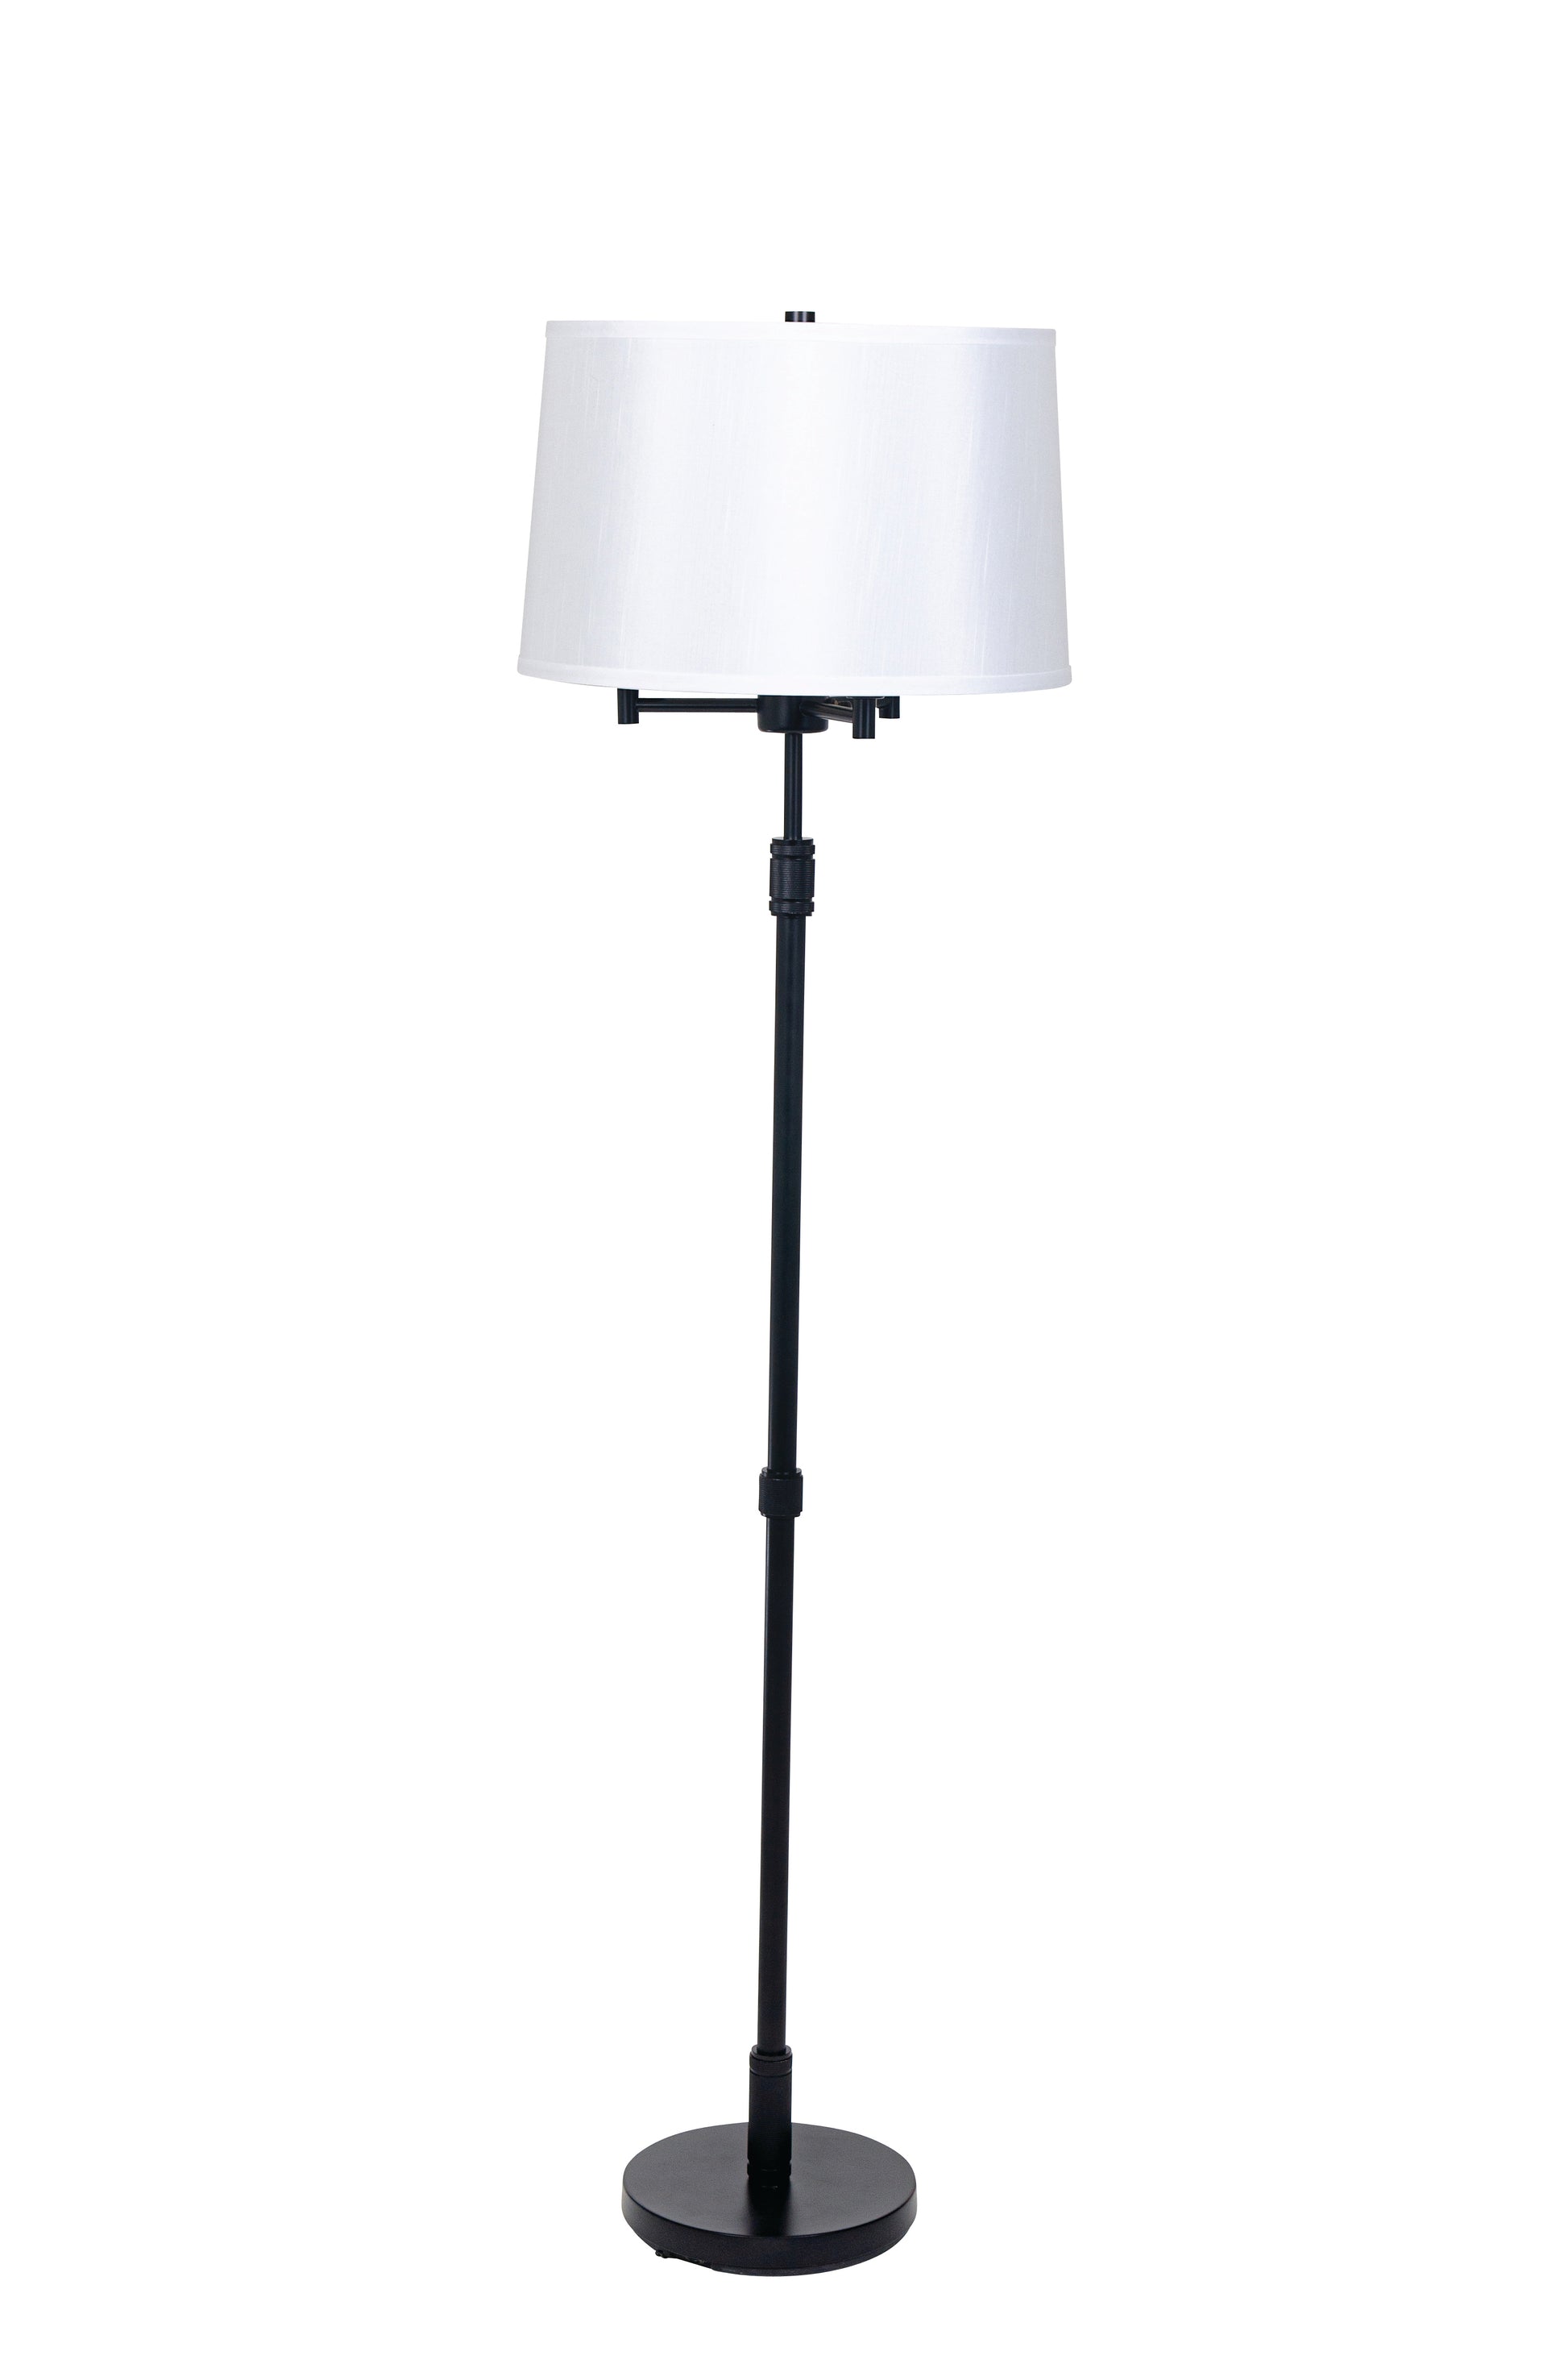 House of Troy Killington Black 6-way Floor Lamp with hardback shade KL300-BLK